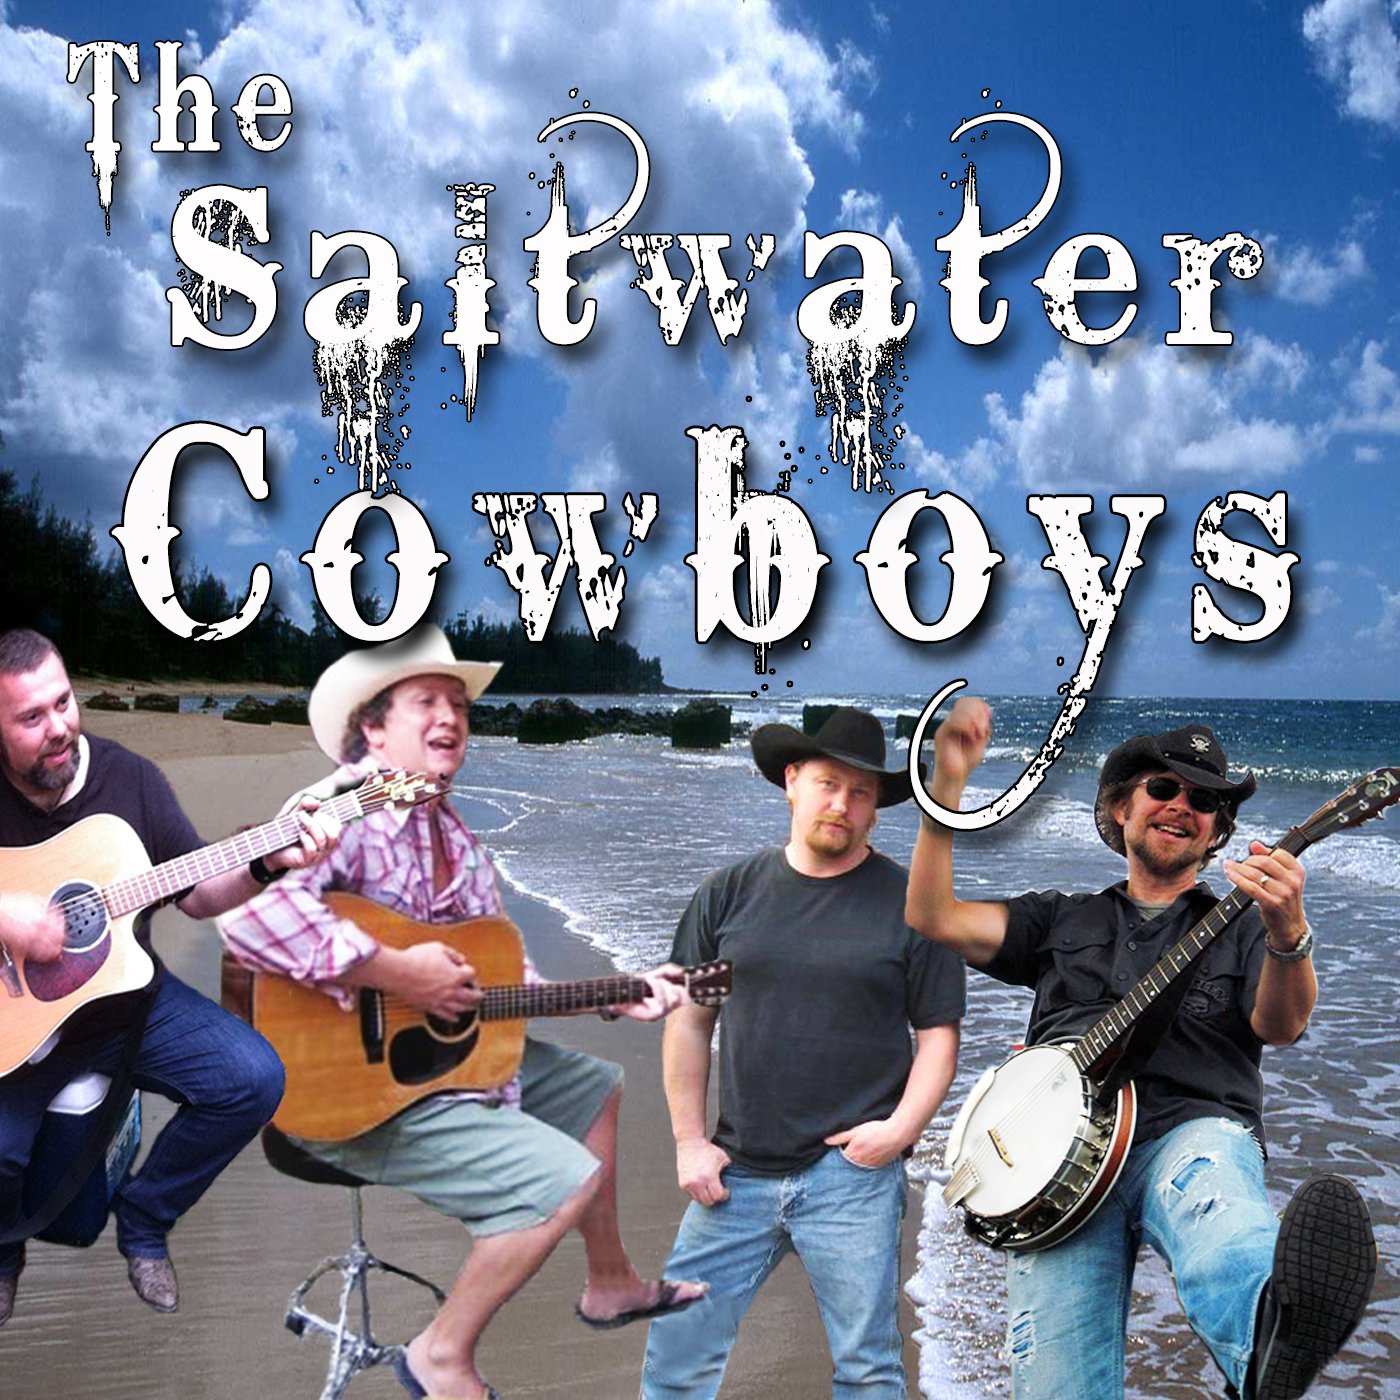 Ditch City, Adventures of the Salt Water Cowboy